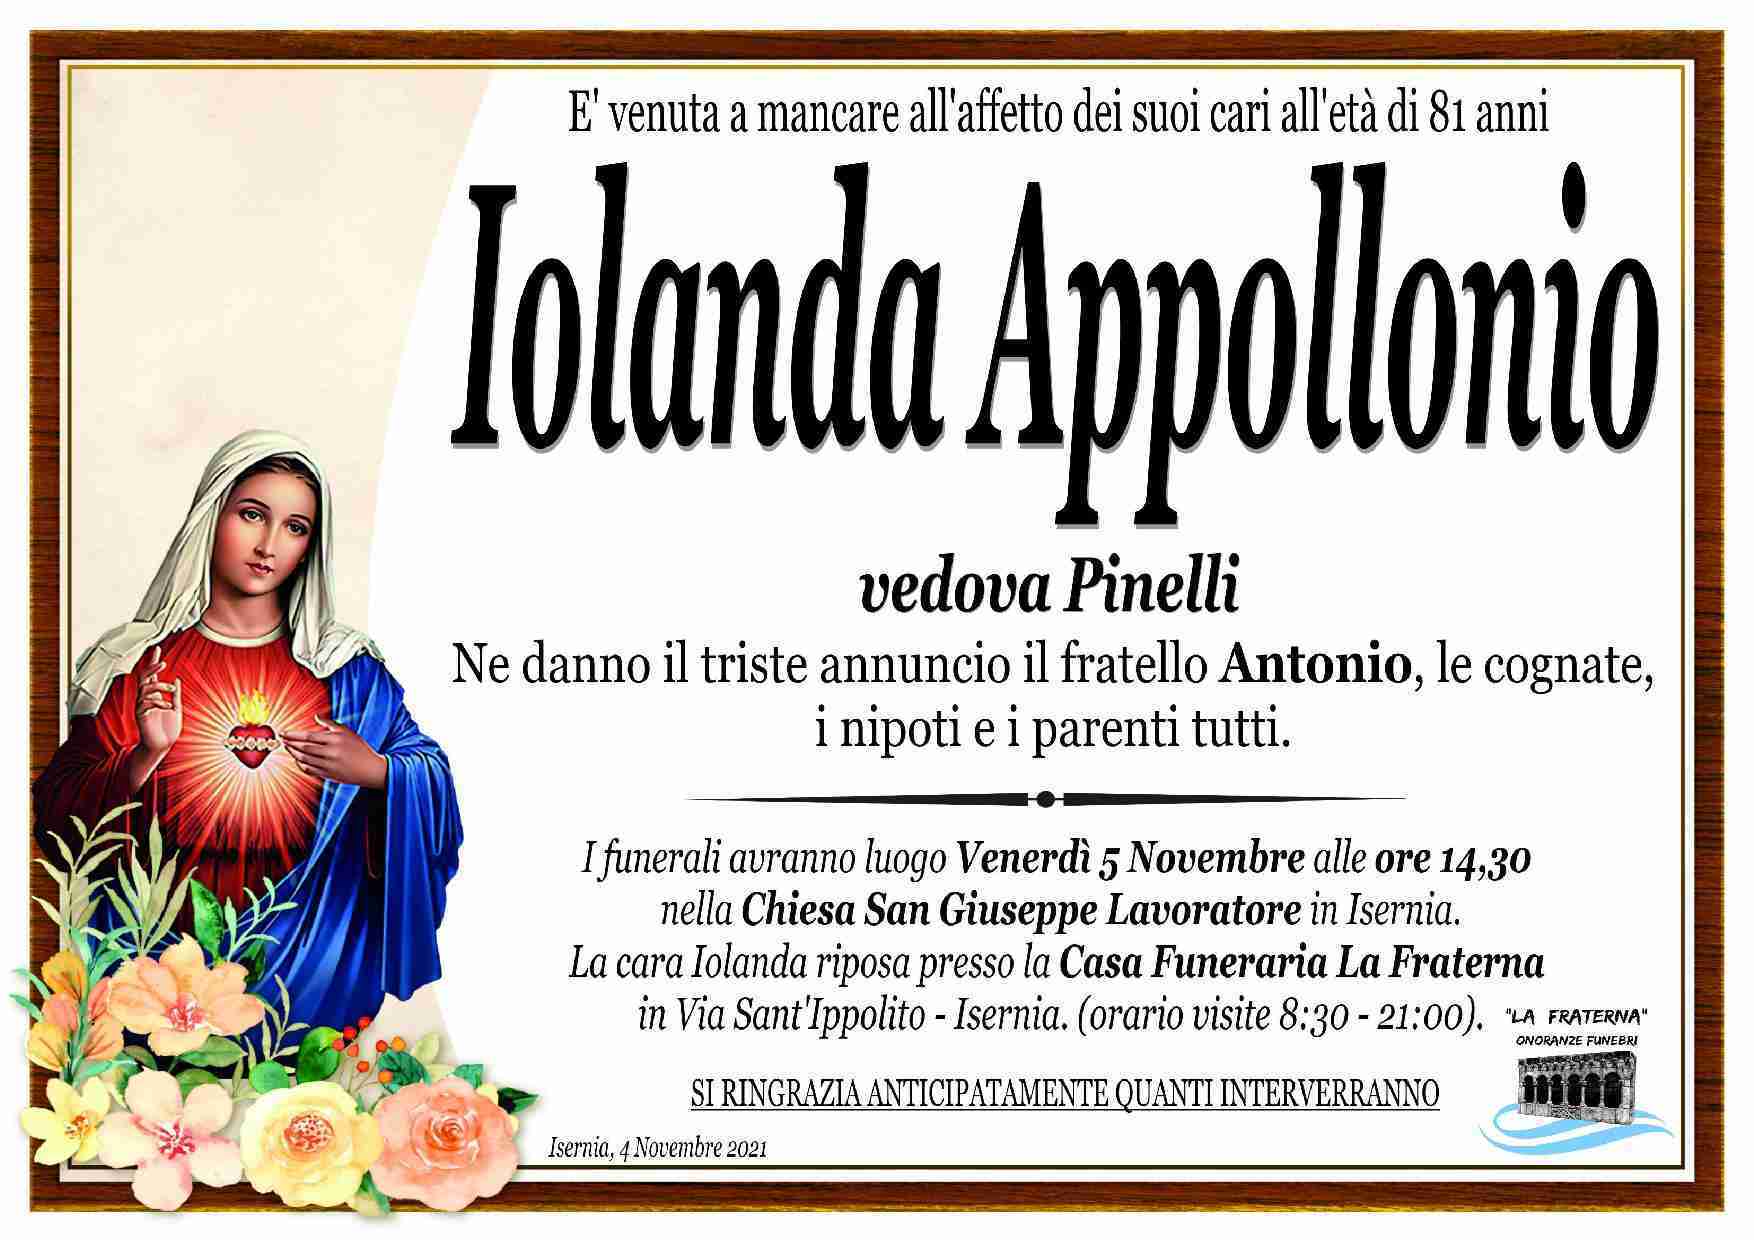 Iolanda Appollonio